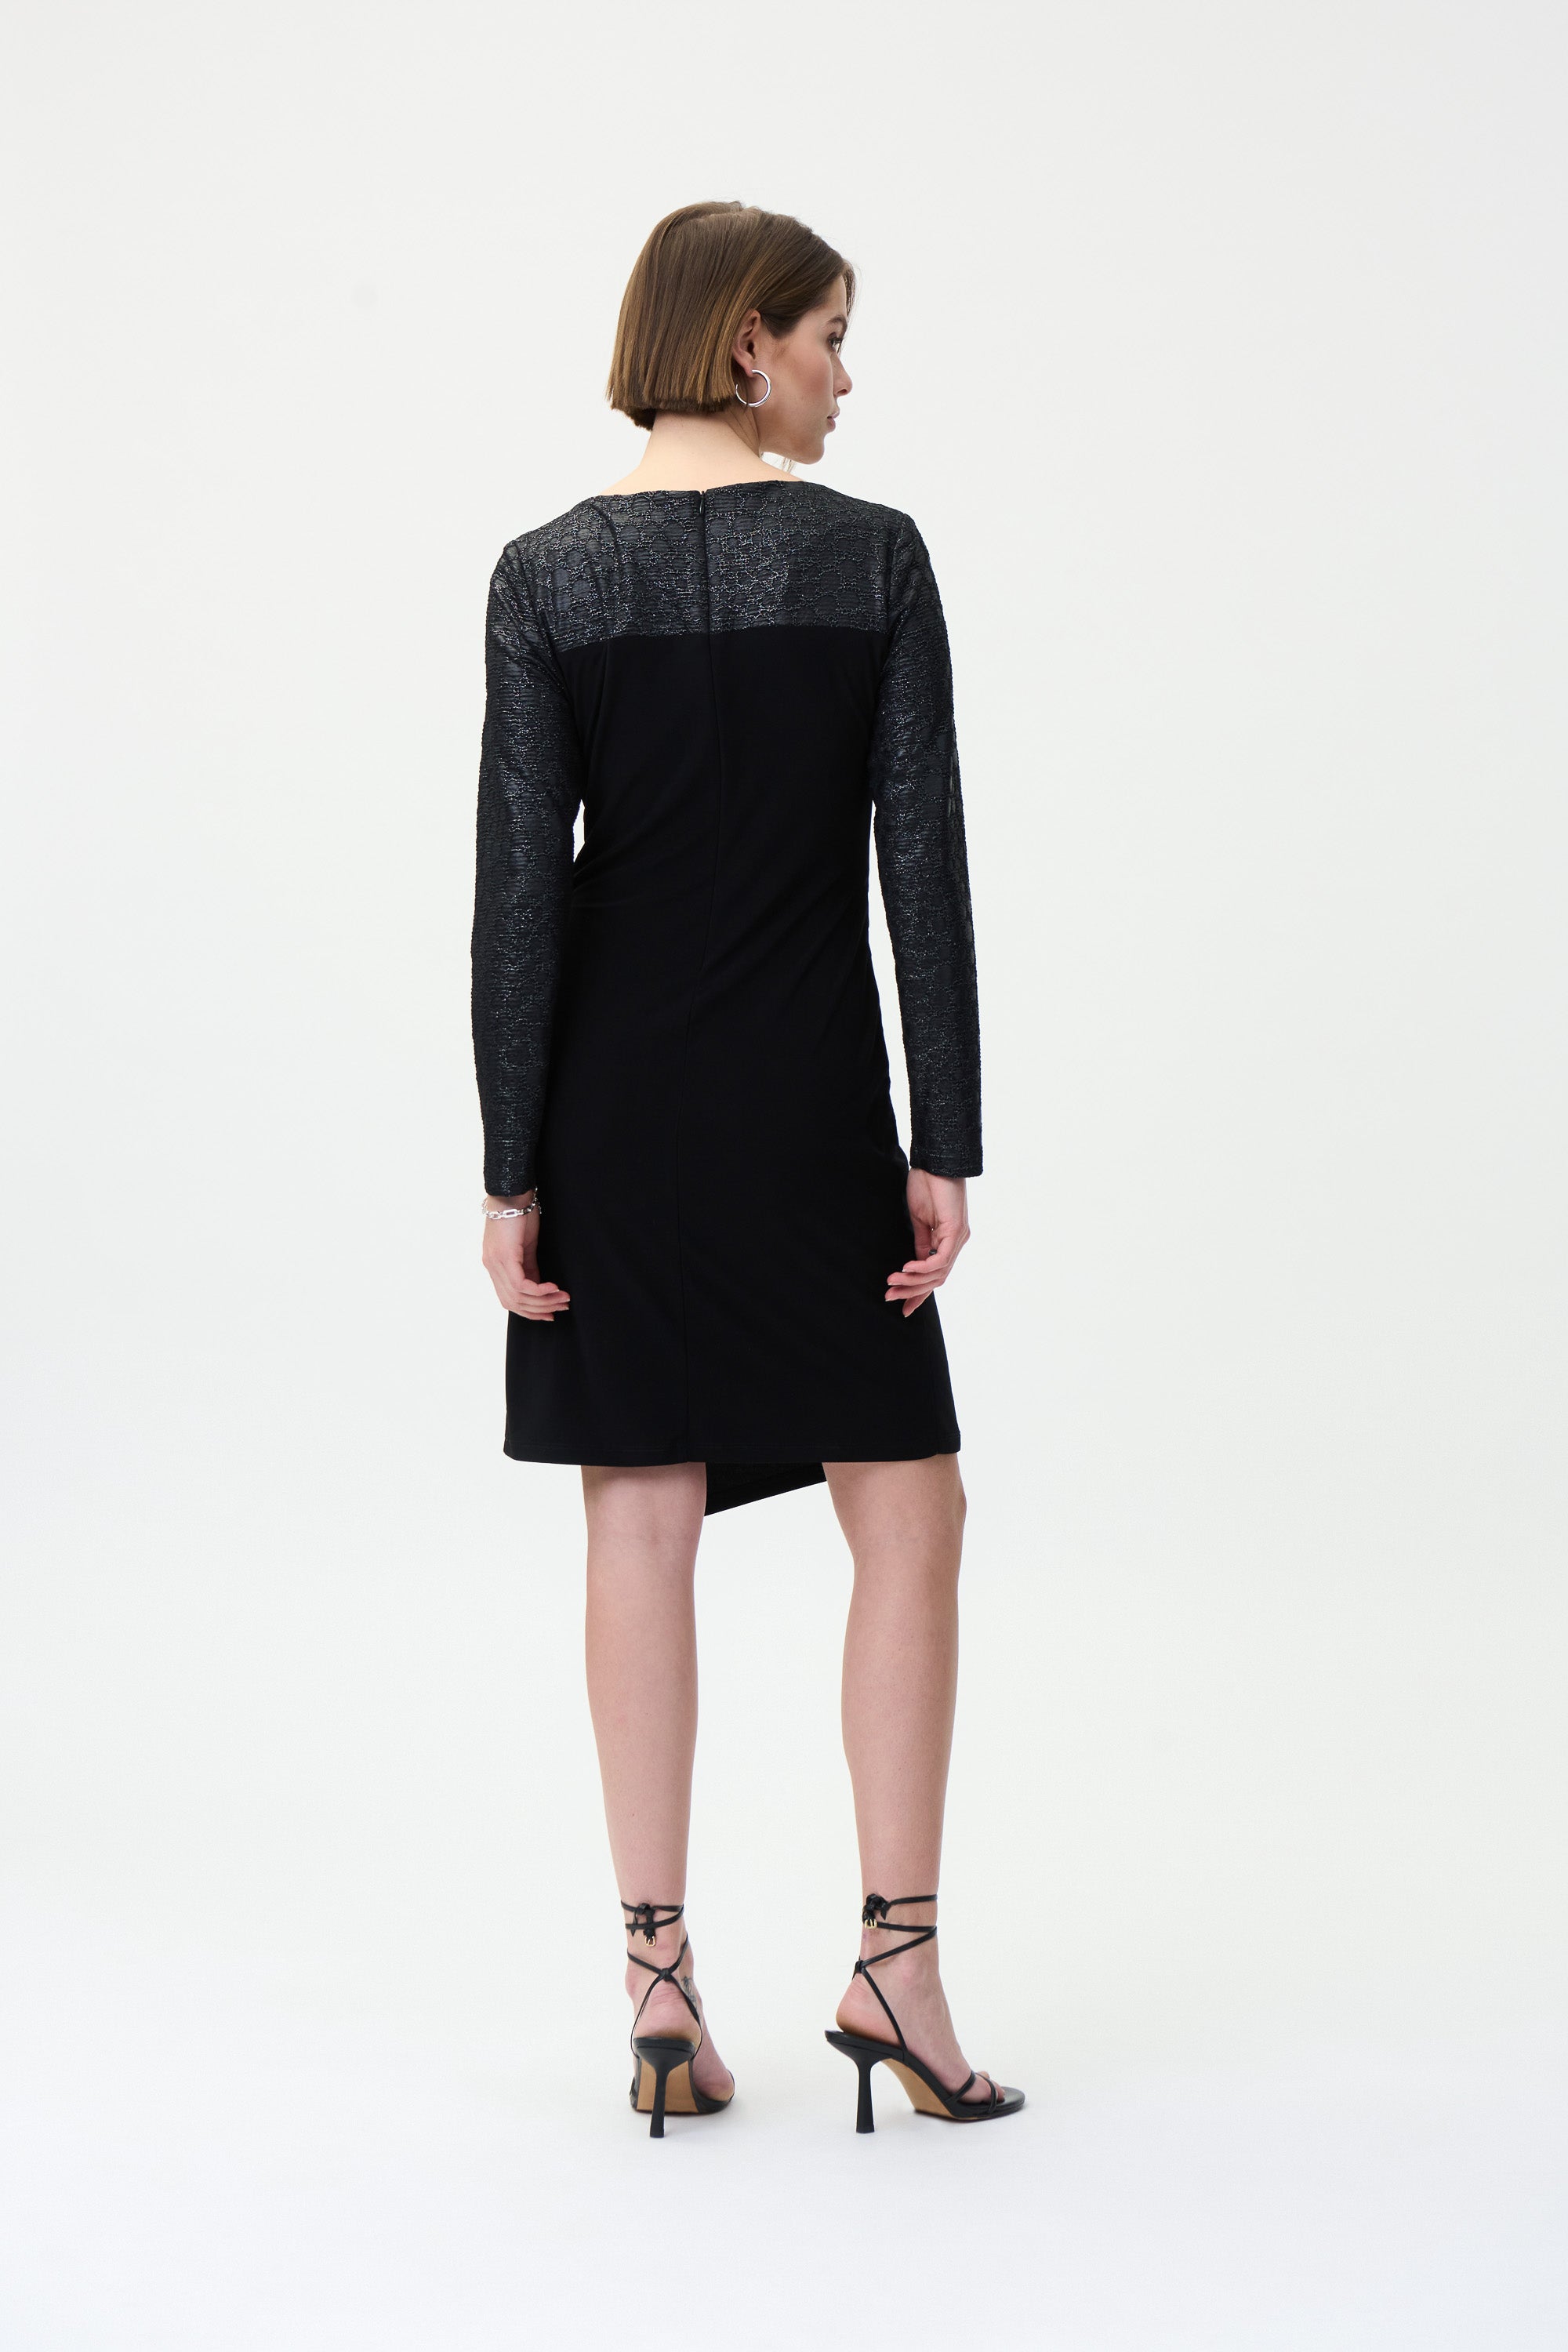 Joseph Ribkoff Ruched Detail Black Dress